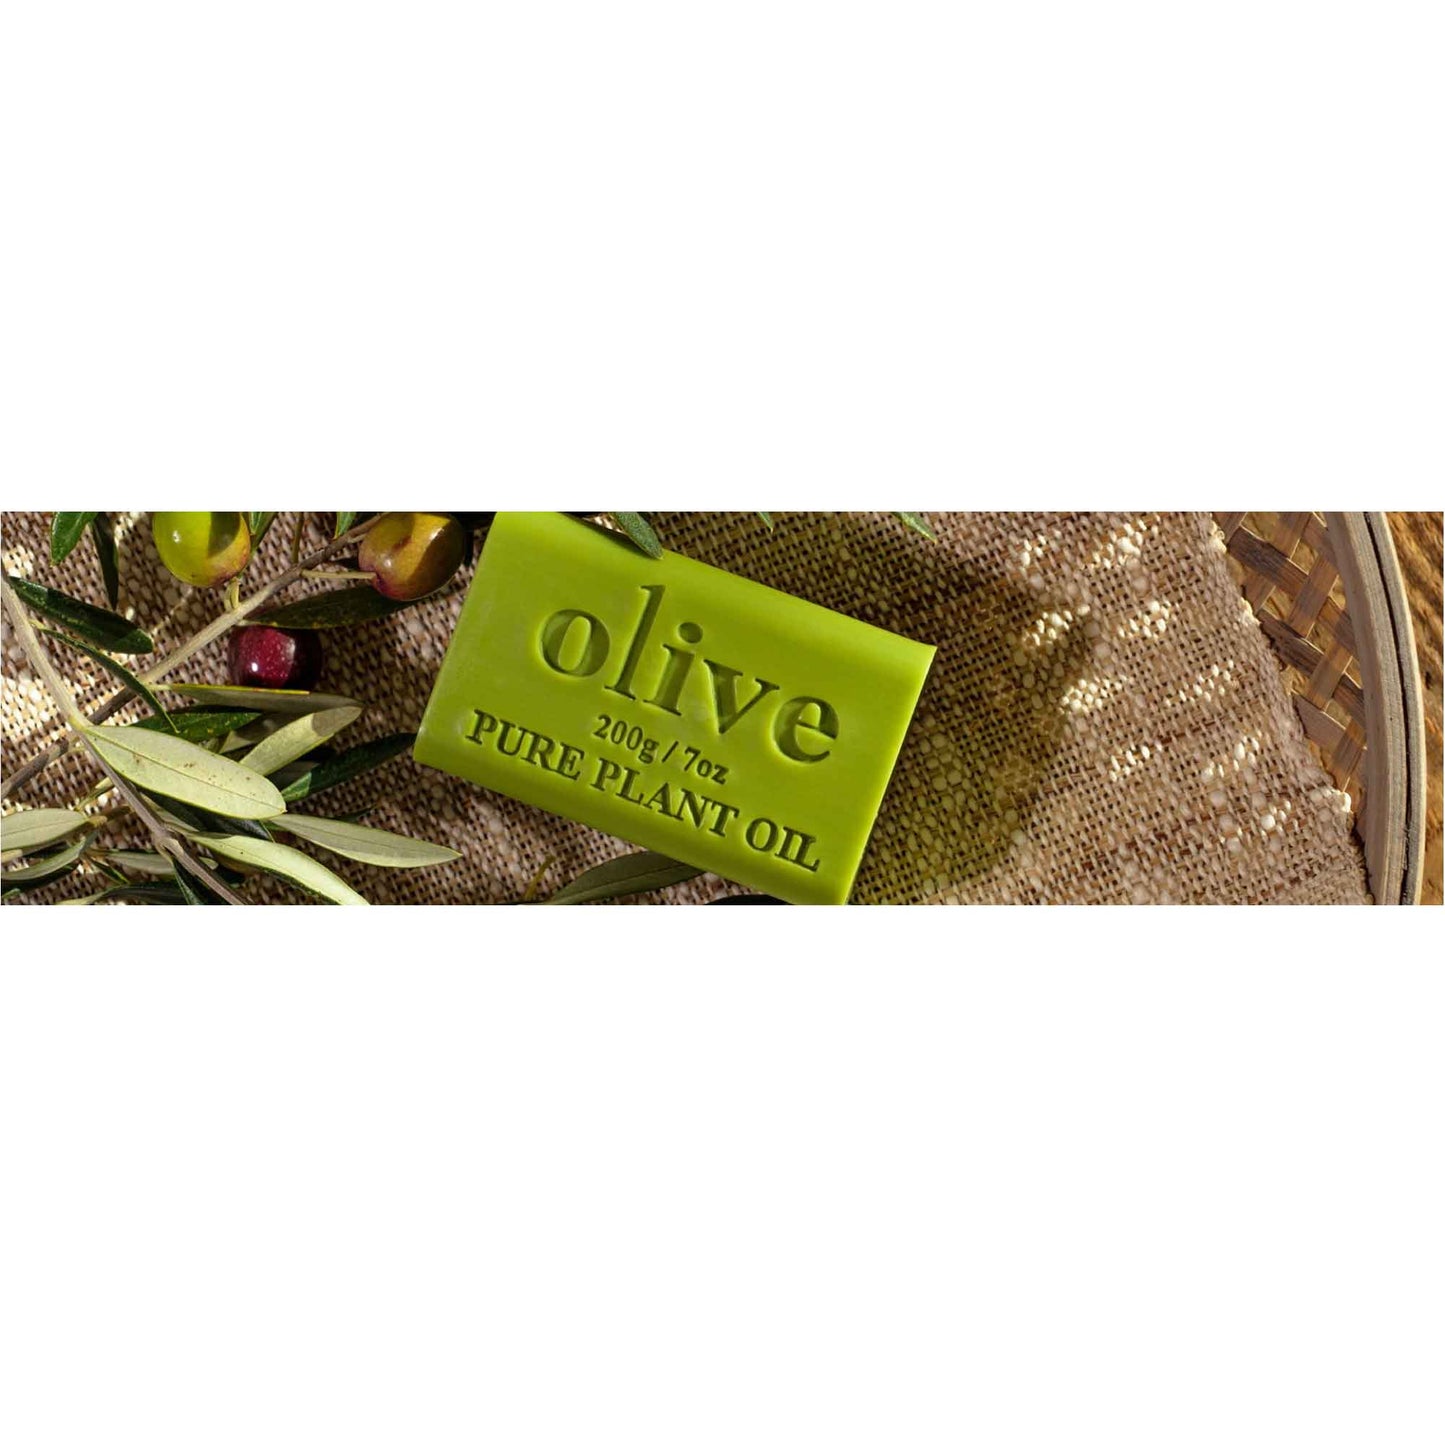 65x 200g Plant Oil Soap Olive Scent Pure Natural Vegetable Base Bar Australian